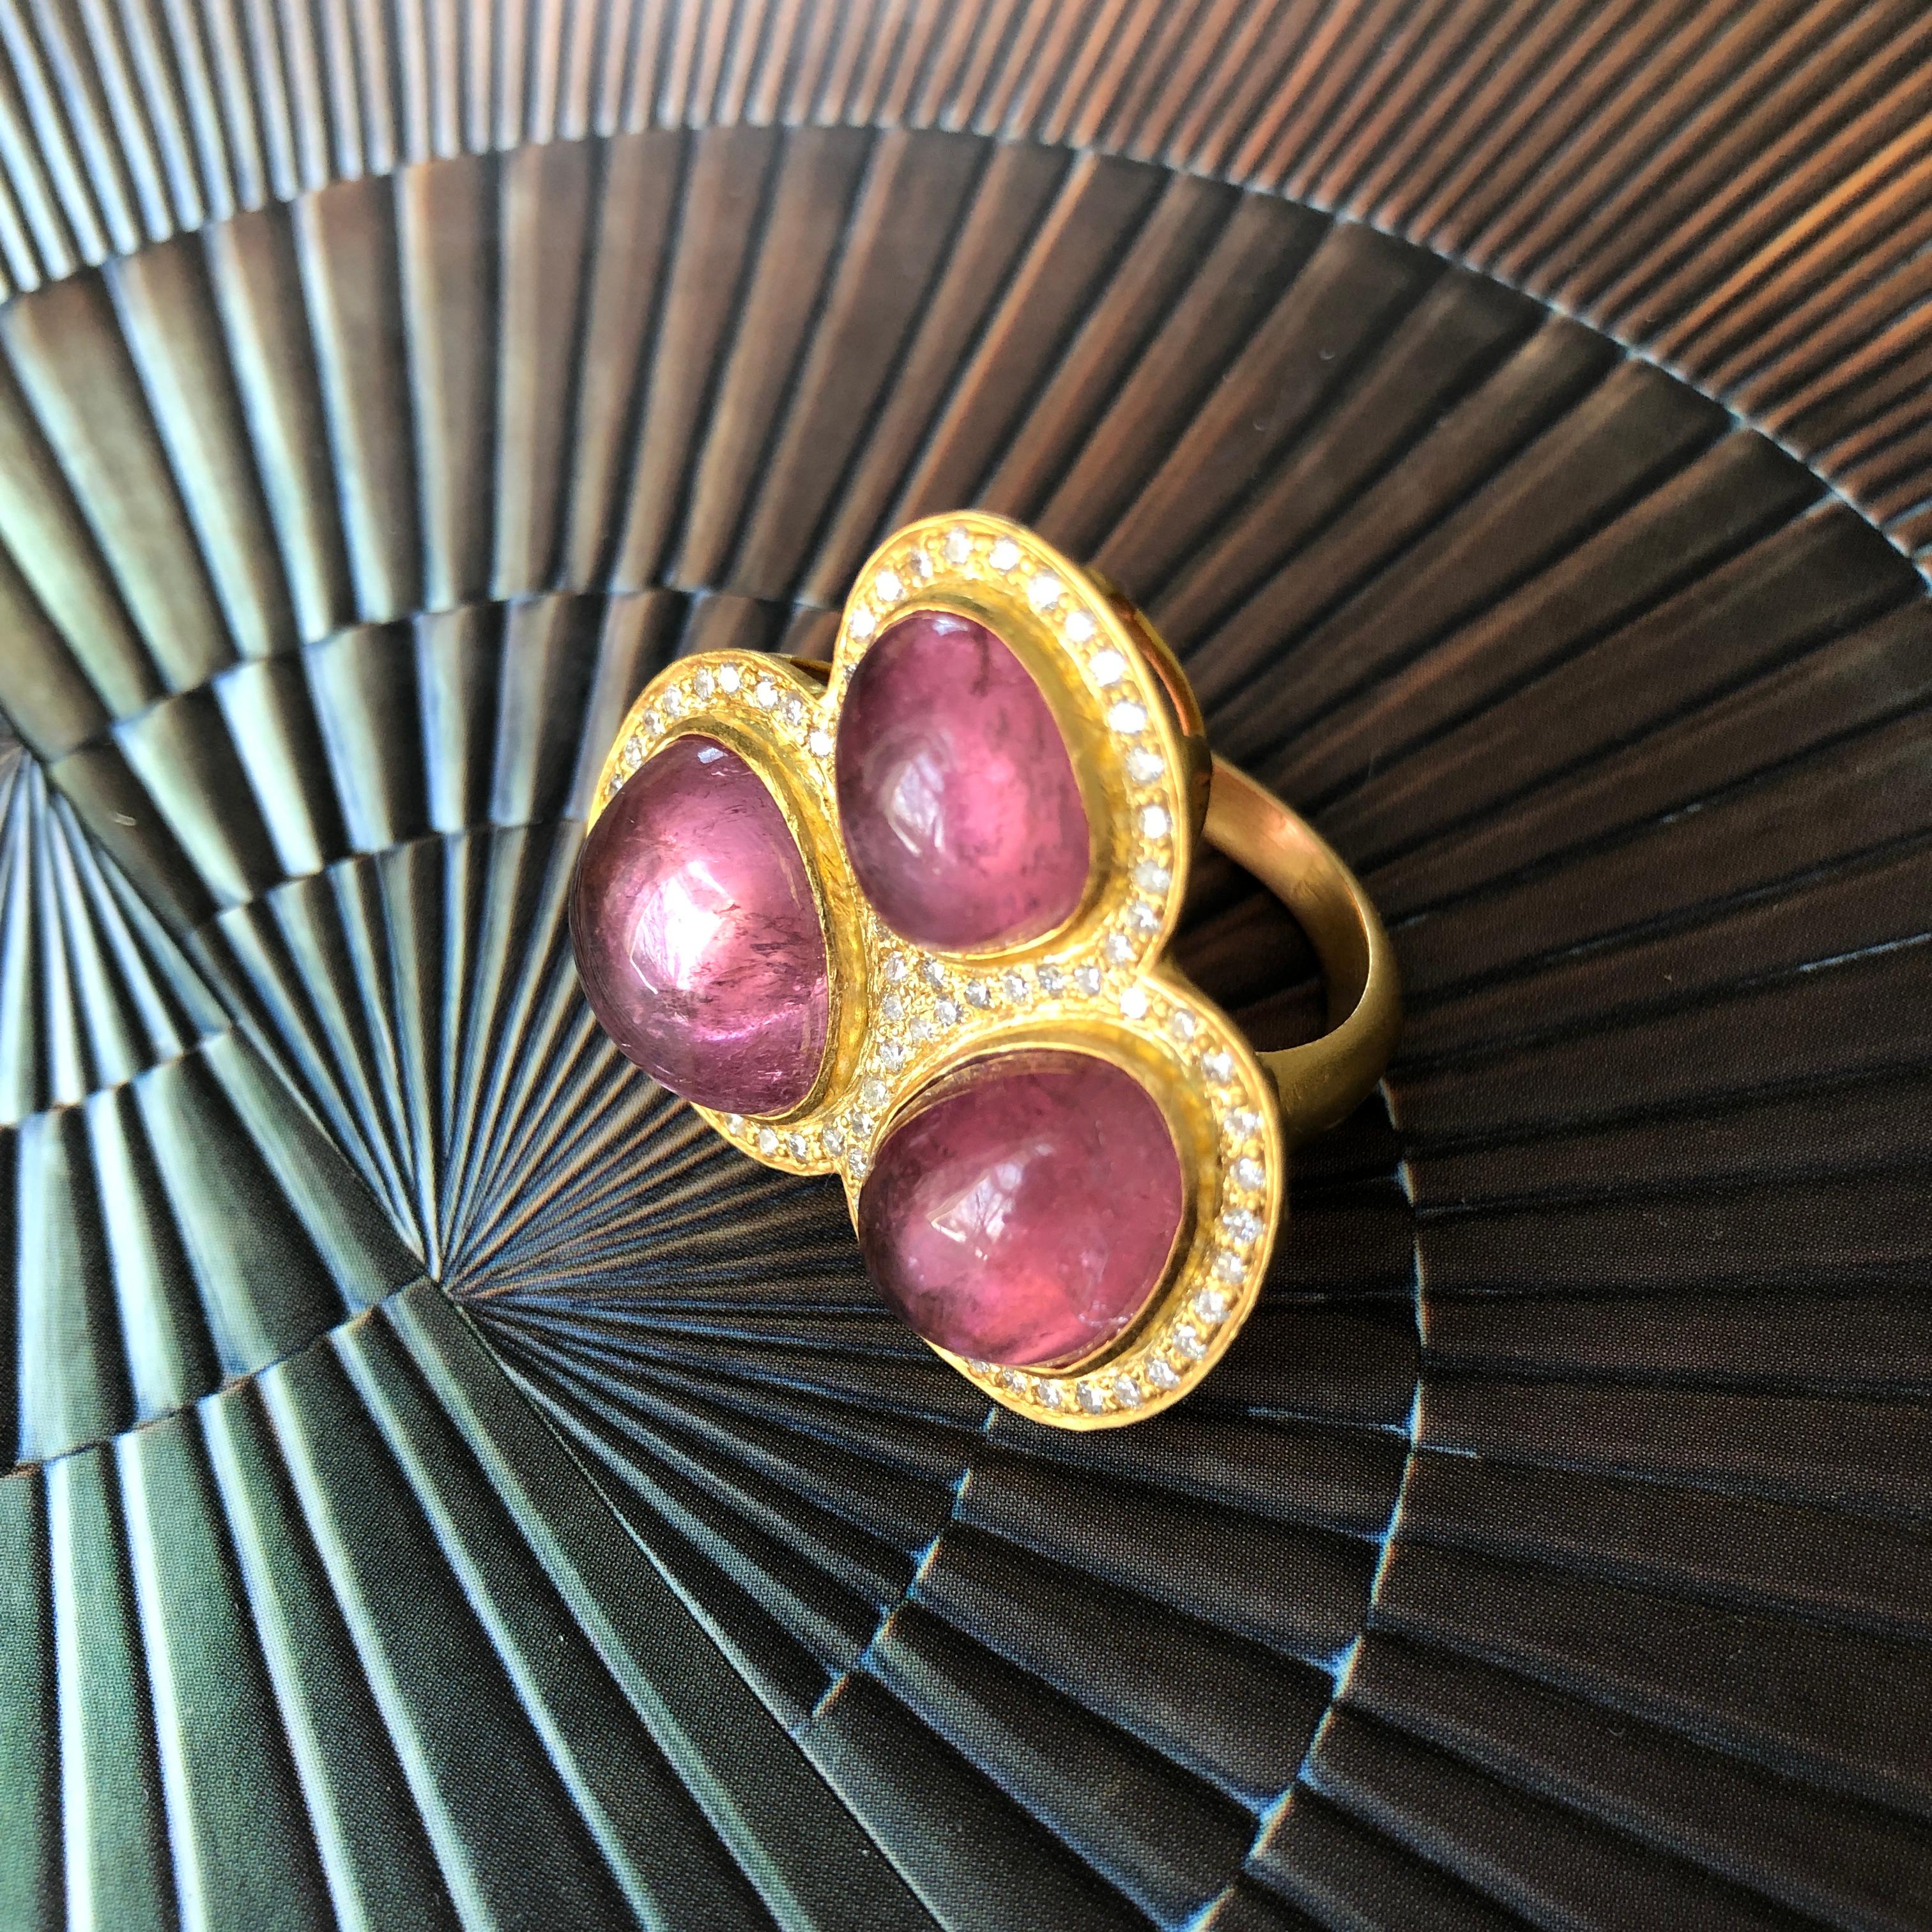 22.91 Carat Pink Tourmaline Diamond Cocktail Ring by Lauren Harper For Sale 4